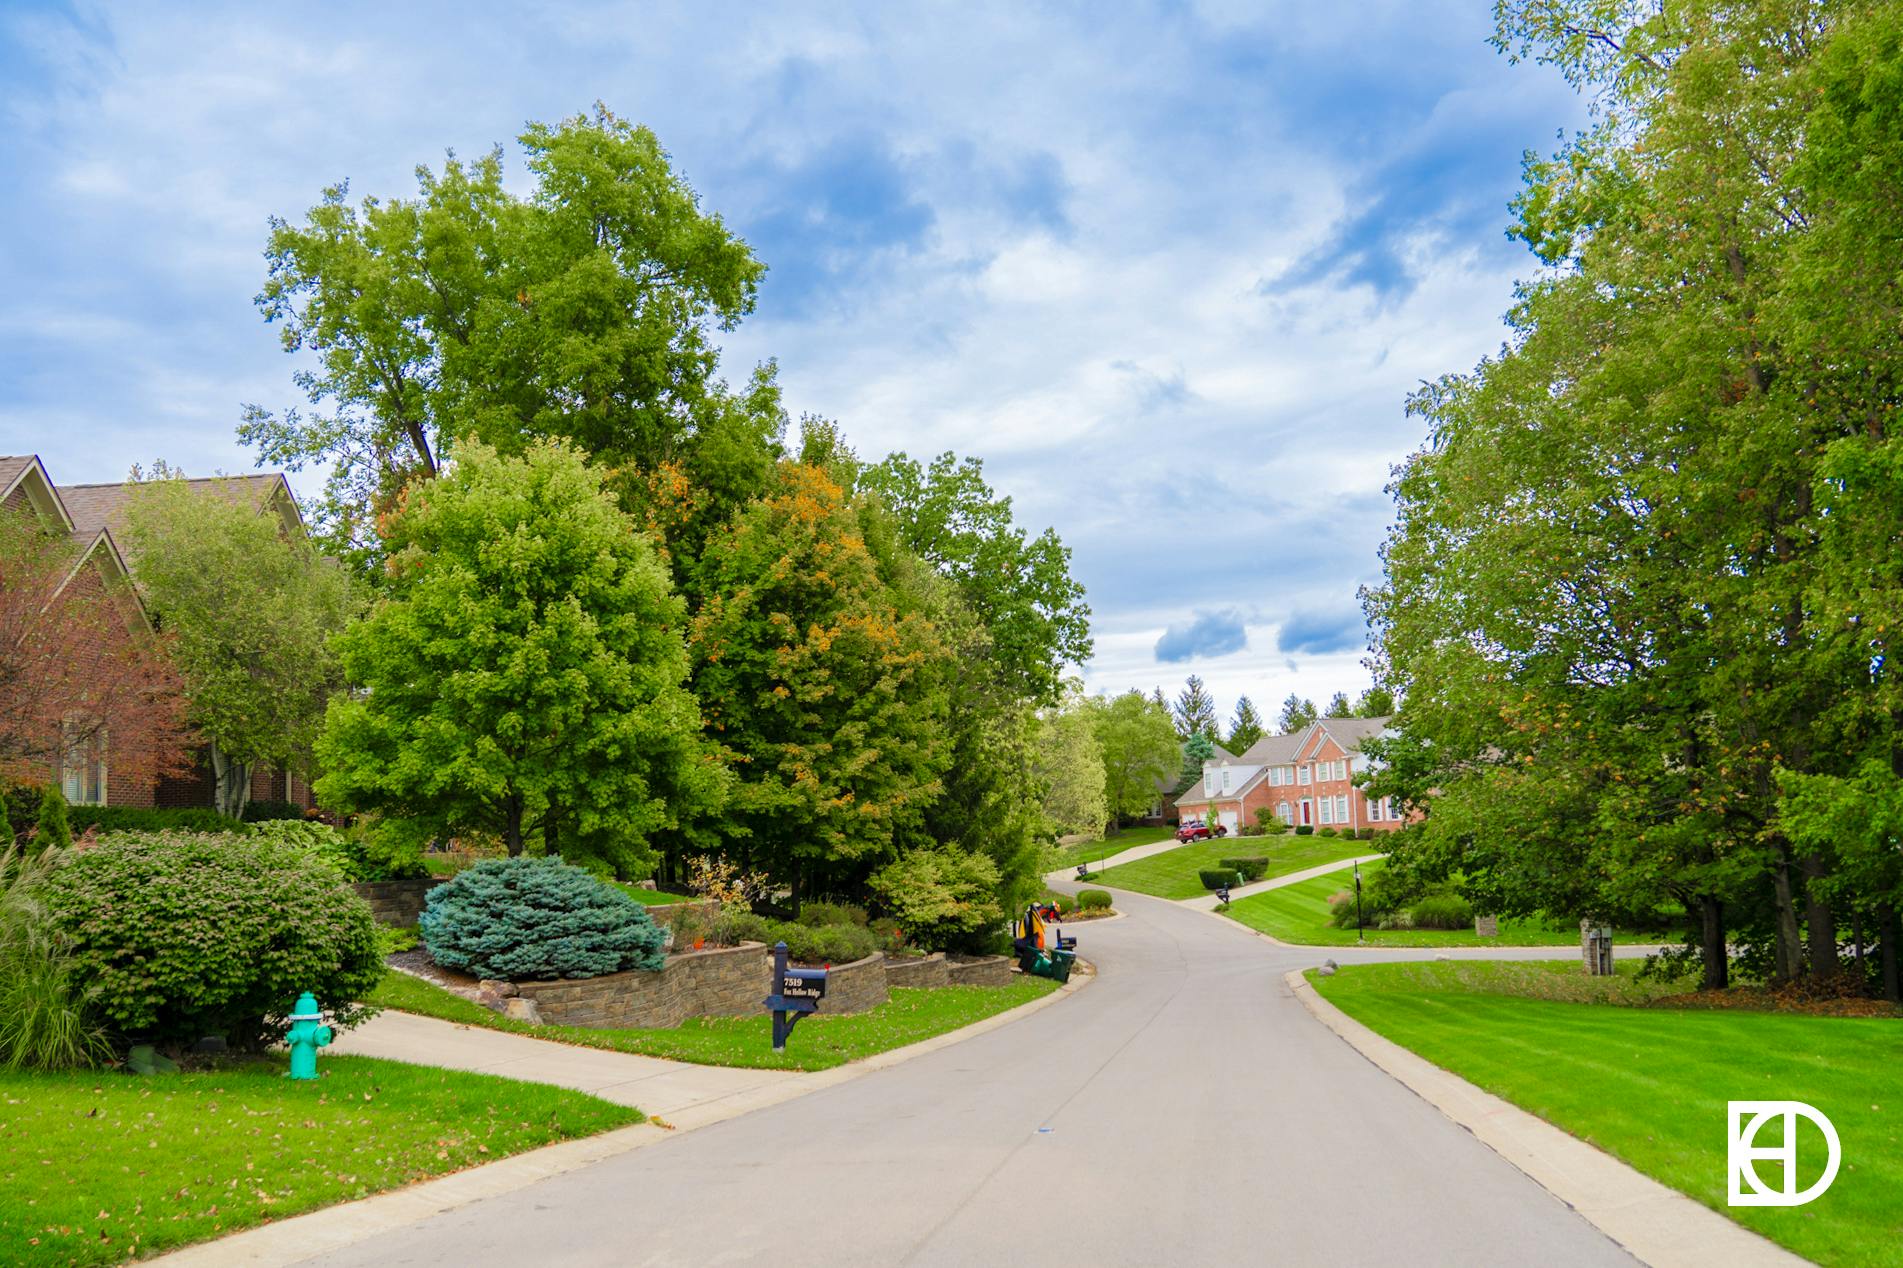 Photo of tree-lined street in Fox Hollow neighborhood in Zionsville, Indiana.